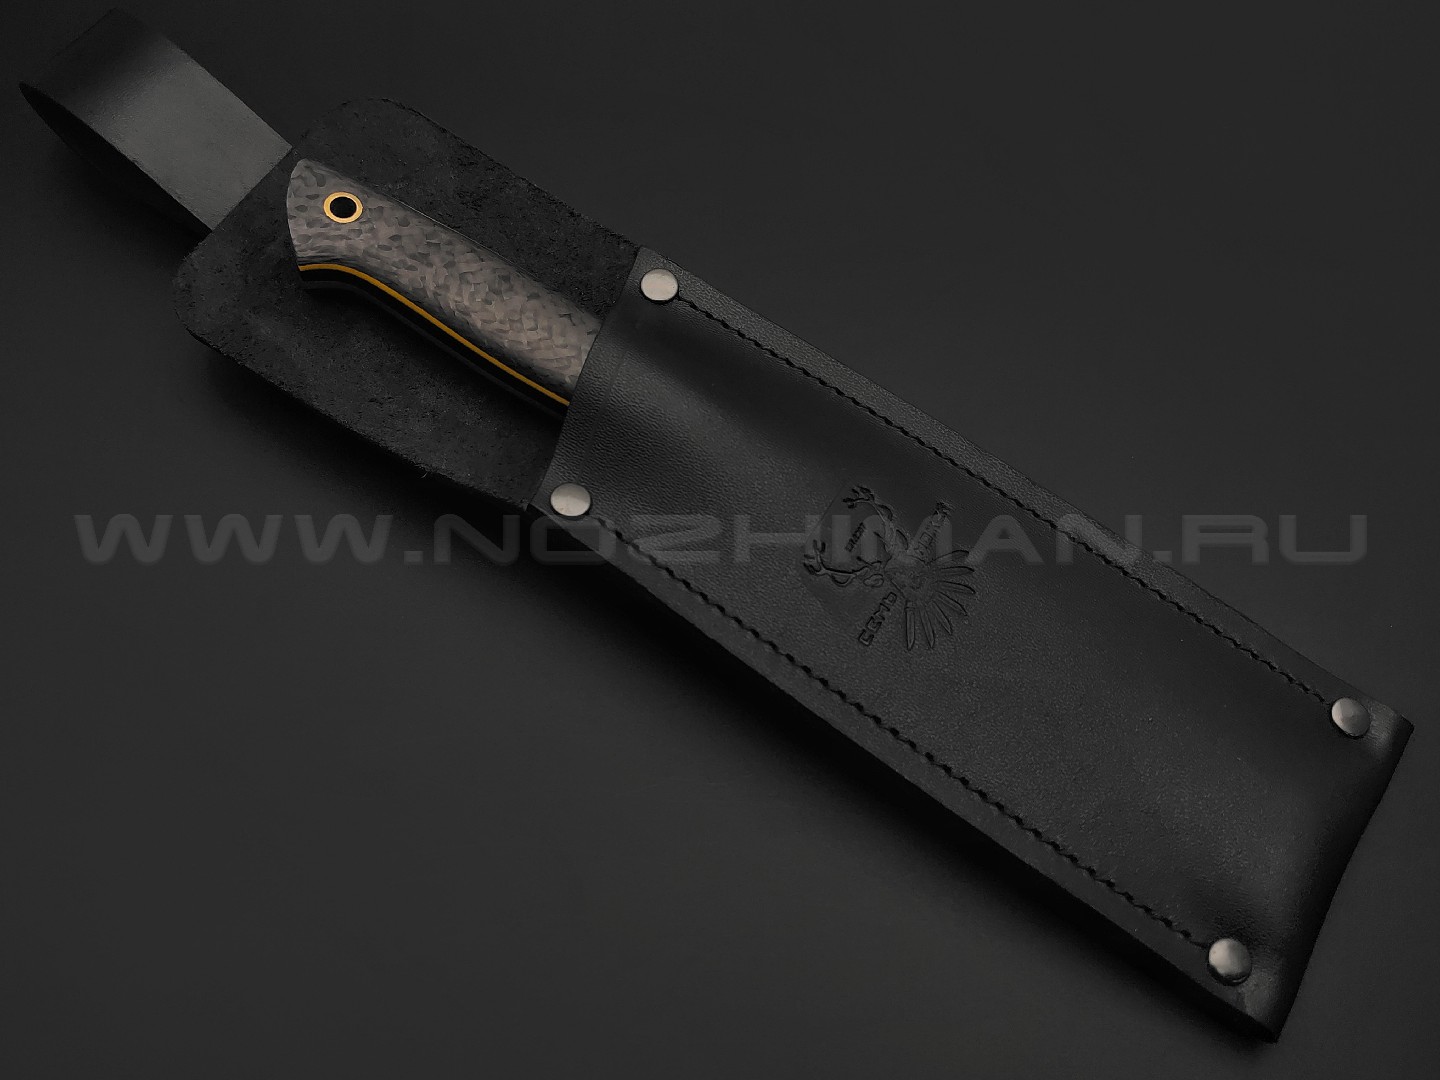 7 ножей нож ТехноПчак сталь N690 satin, рукоять Carbon fiber, G10 black & yellow